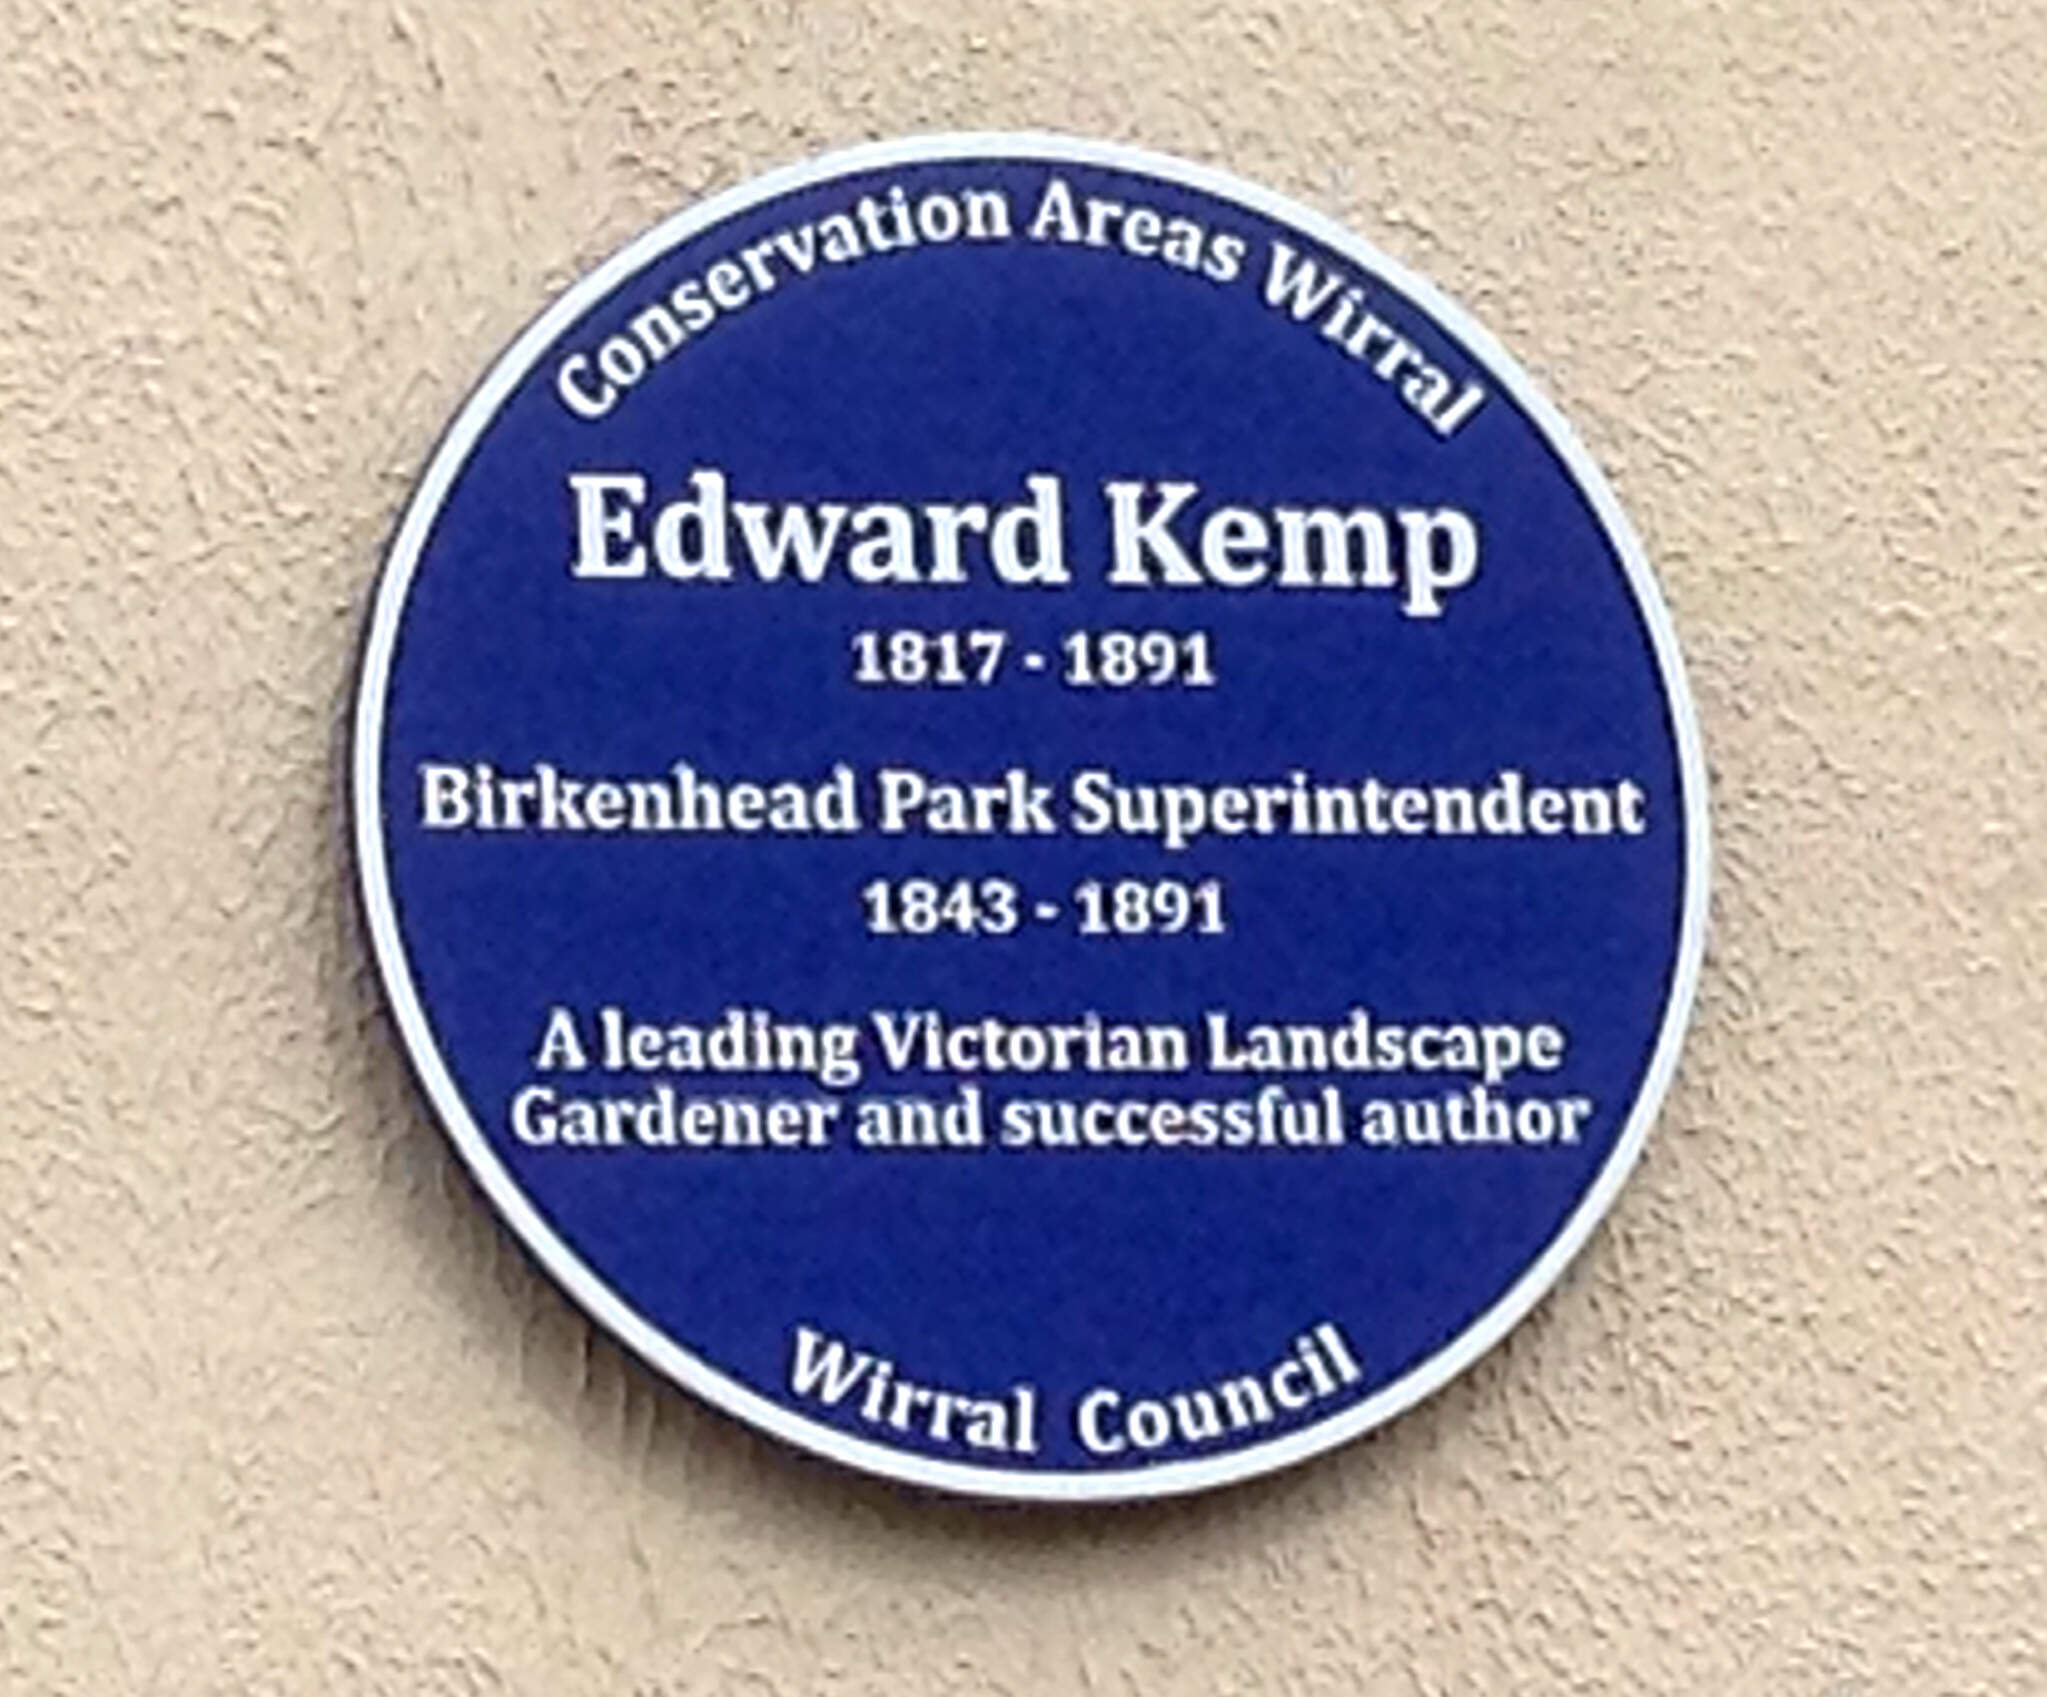 Picture of Blue Plaque commemorating Edward Kemp